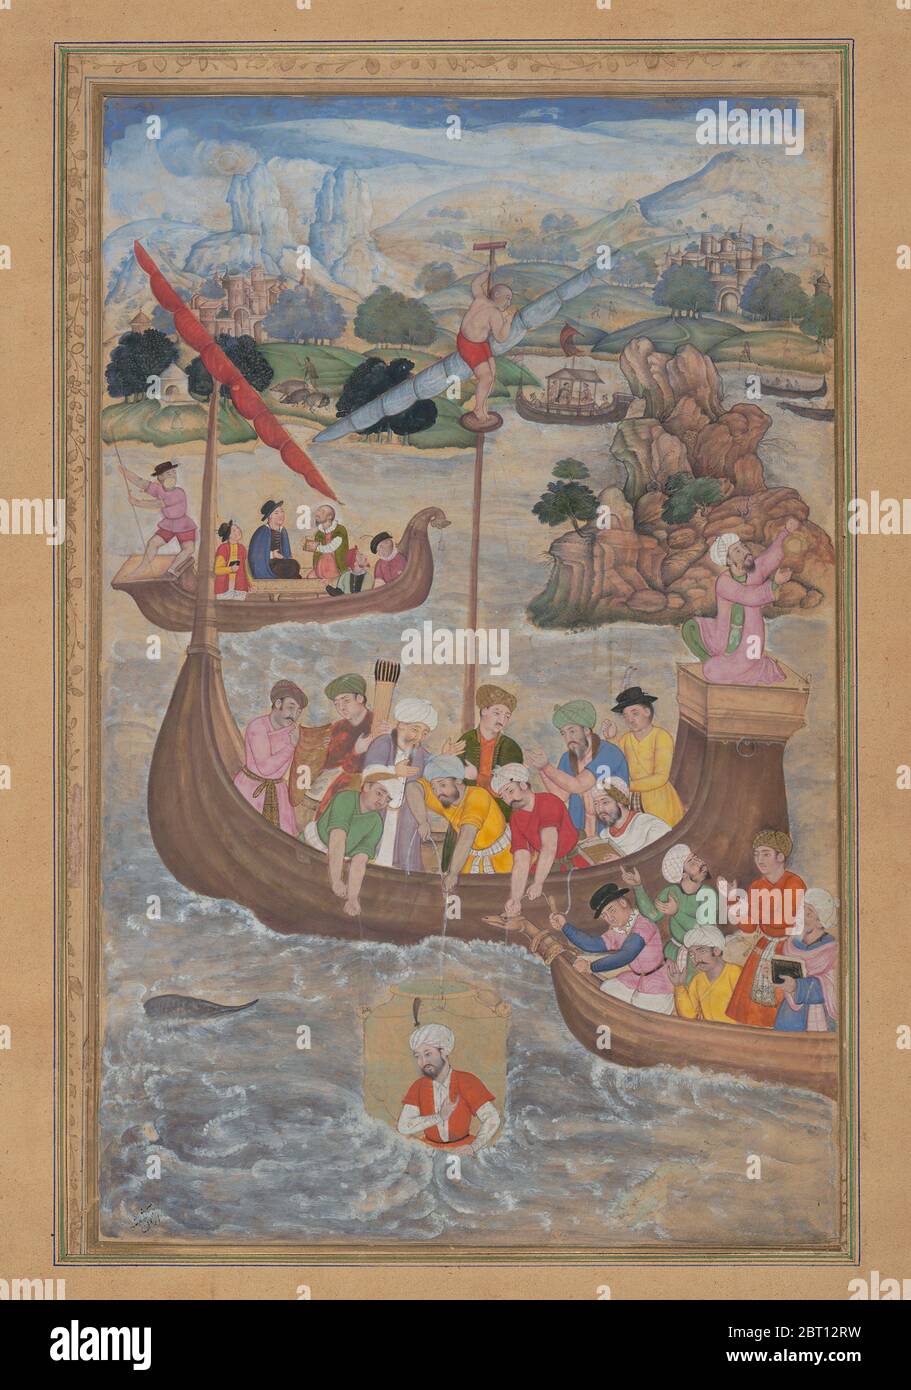 Alexander is Lowered into the Sea, Folio from a Khamsa (Quintet) of Amir Khusrau Dihlavi, 1597-98. Stock Photo